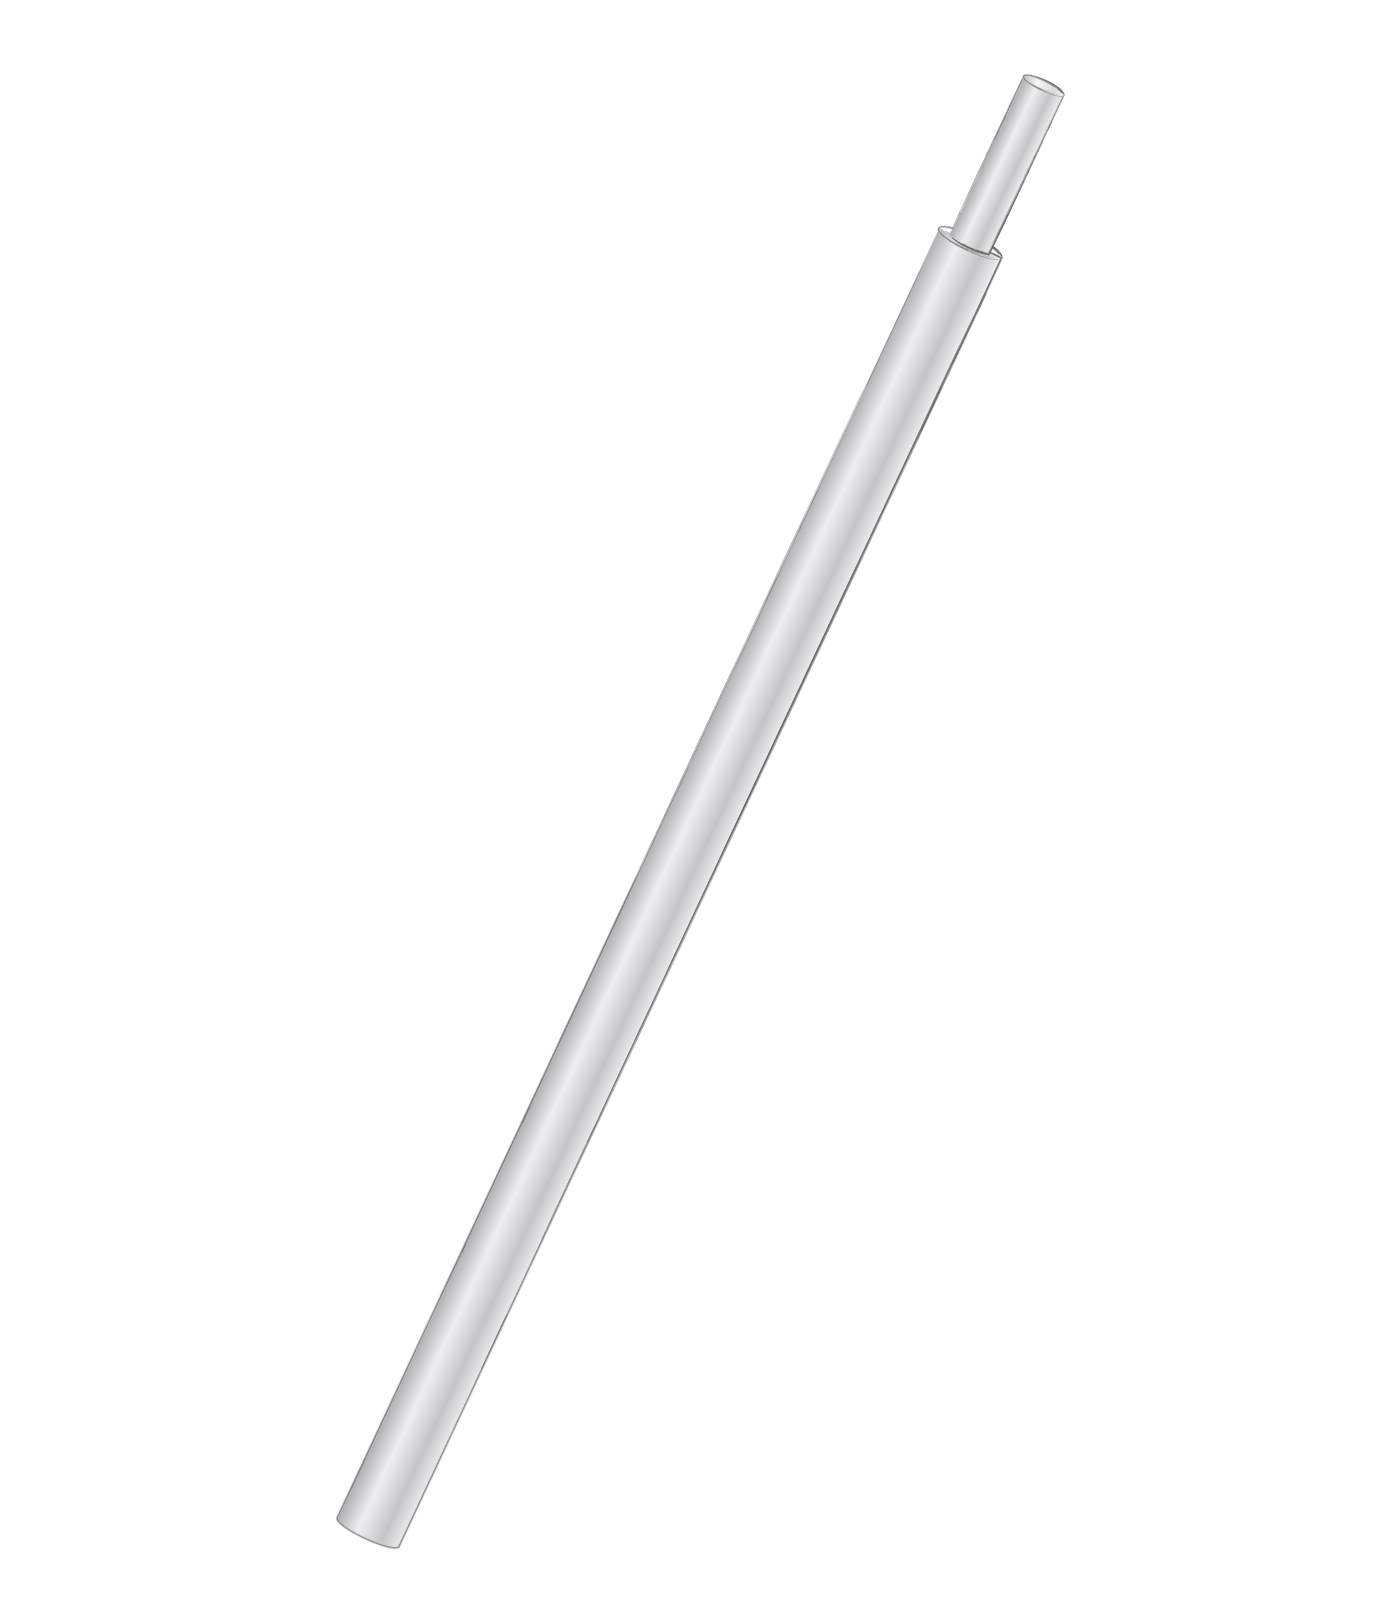  ALU-Steckstange 1.9 m (ø35 mm) 